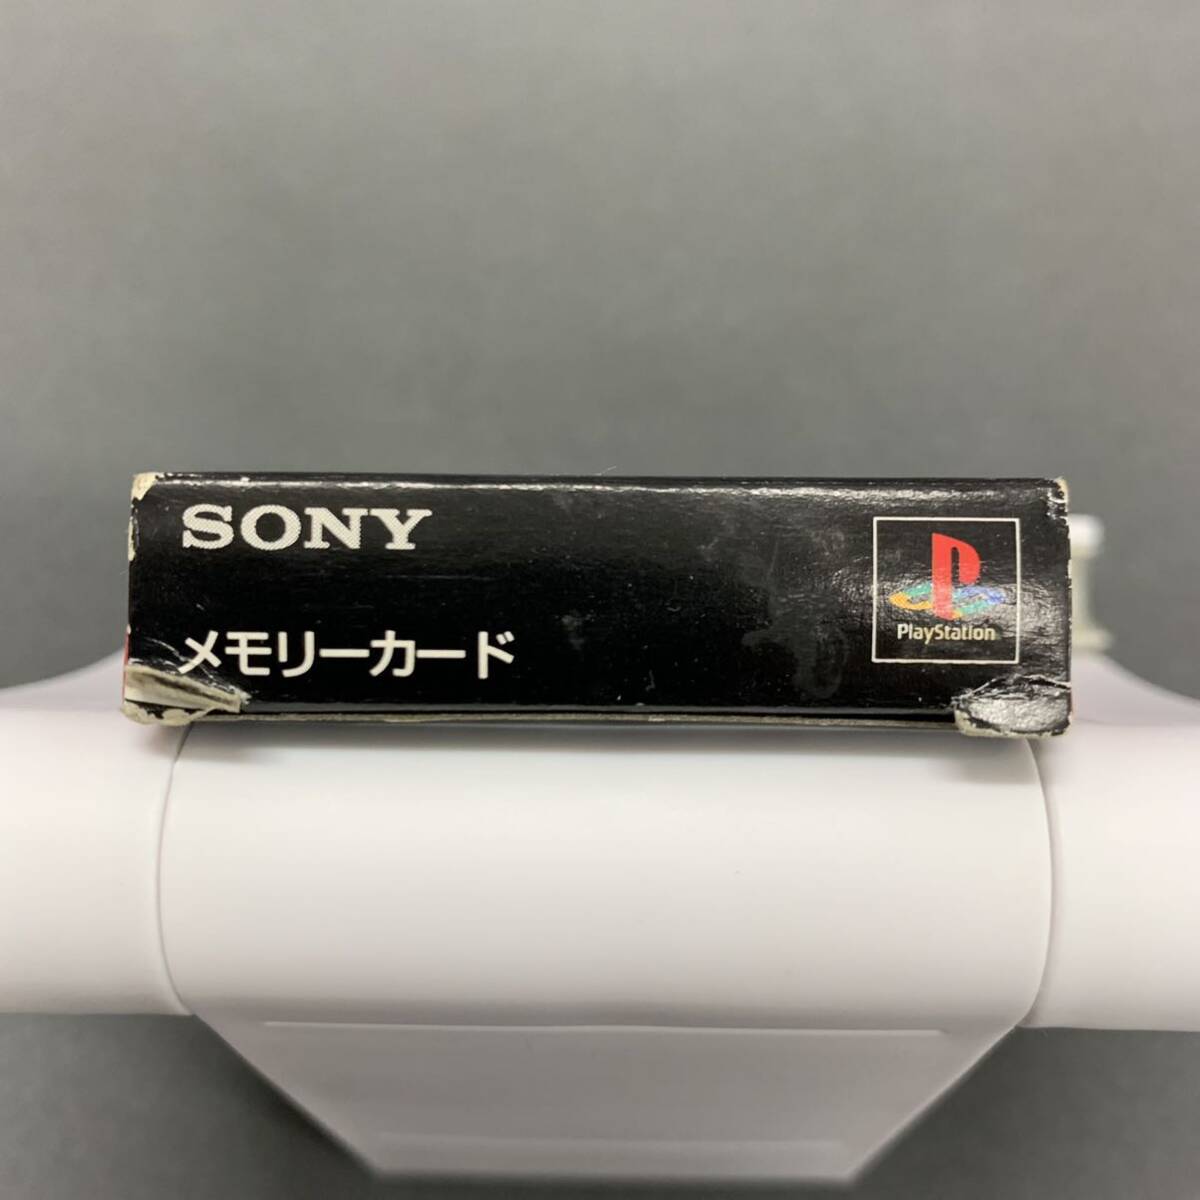 [ б/у товар ]SONY PlayStation карта памяти с коробкой с футляром 15 блок 